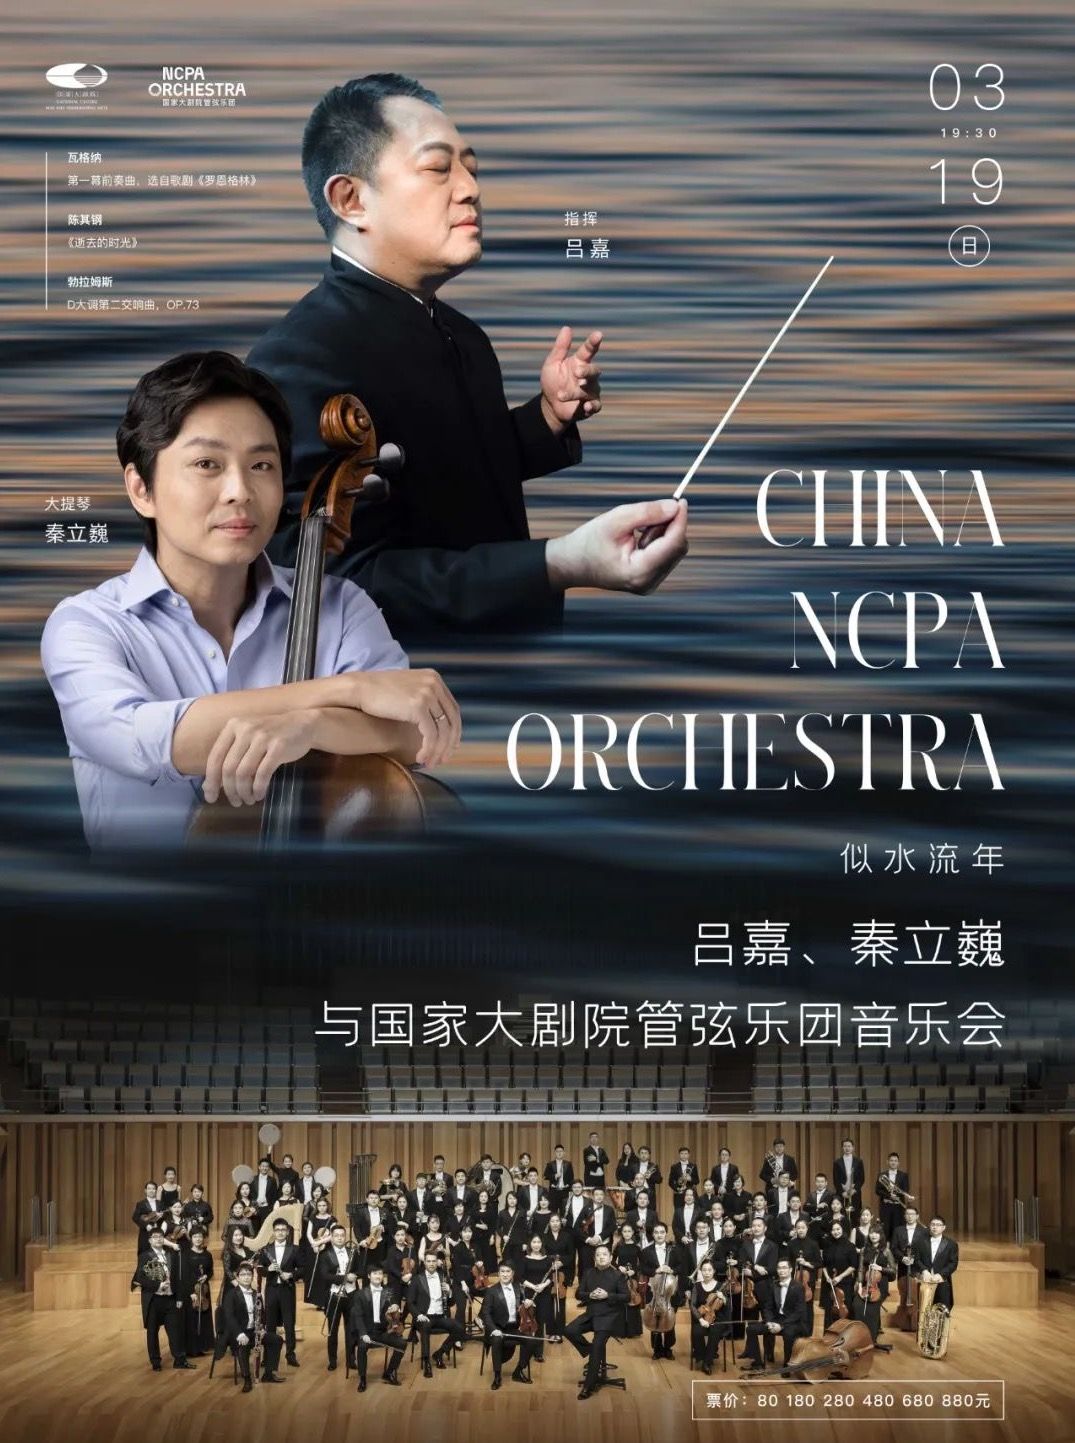 Concert by Lv Jia, Qin Liwei & China NCPA Orchestra | 吕嘉、秦立巍与国家大剧院管弦乐团音乐会